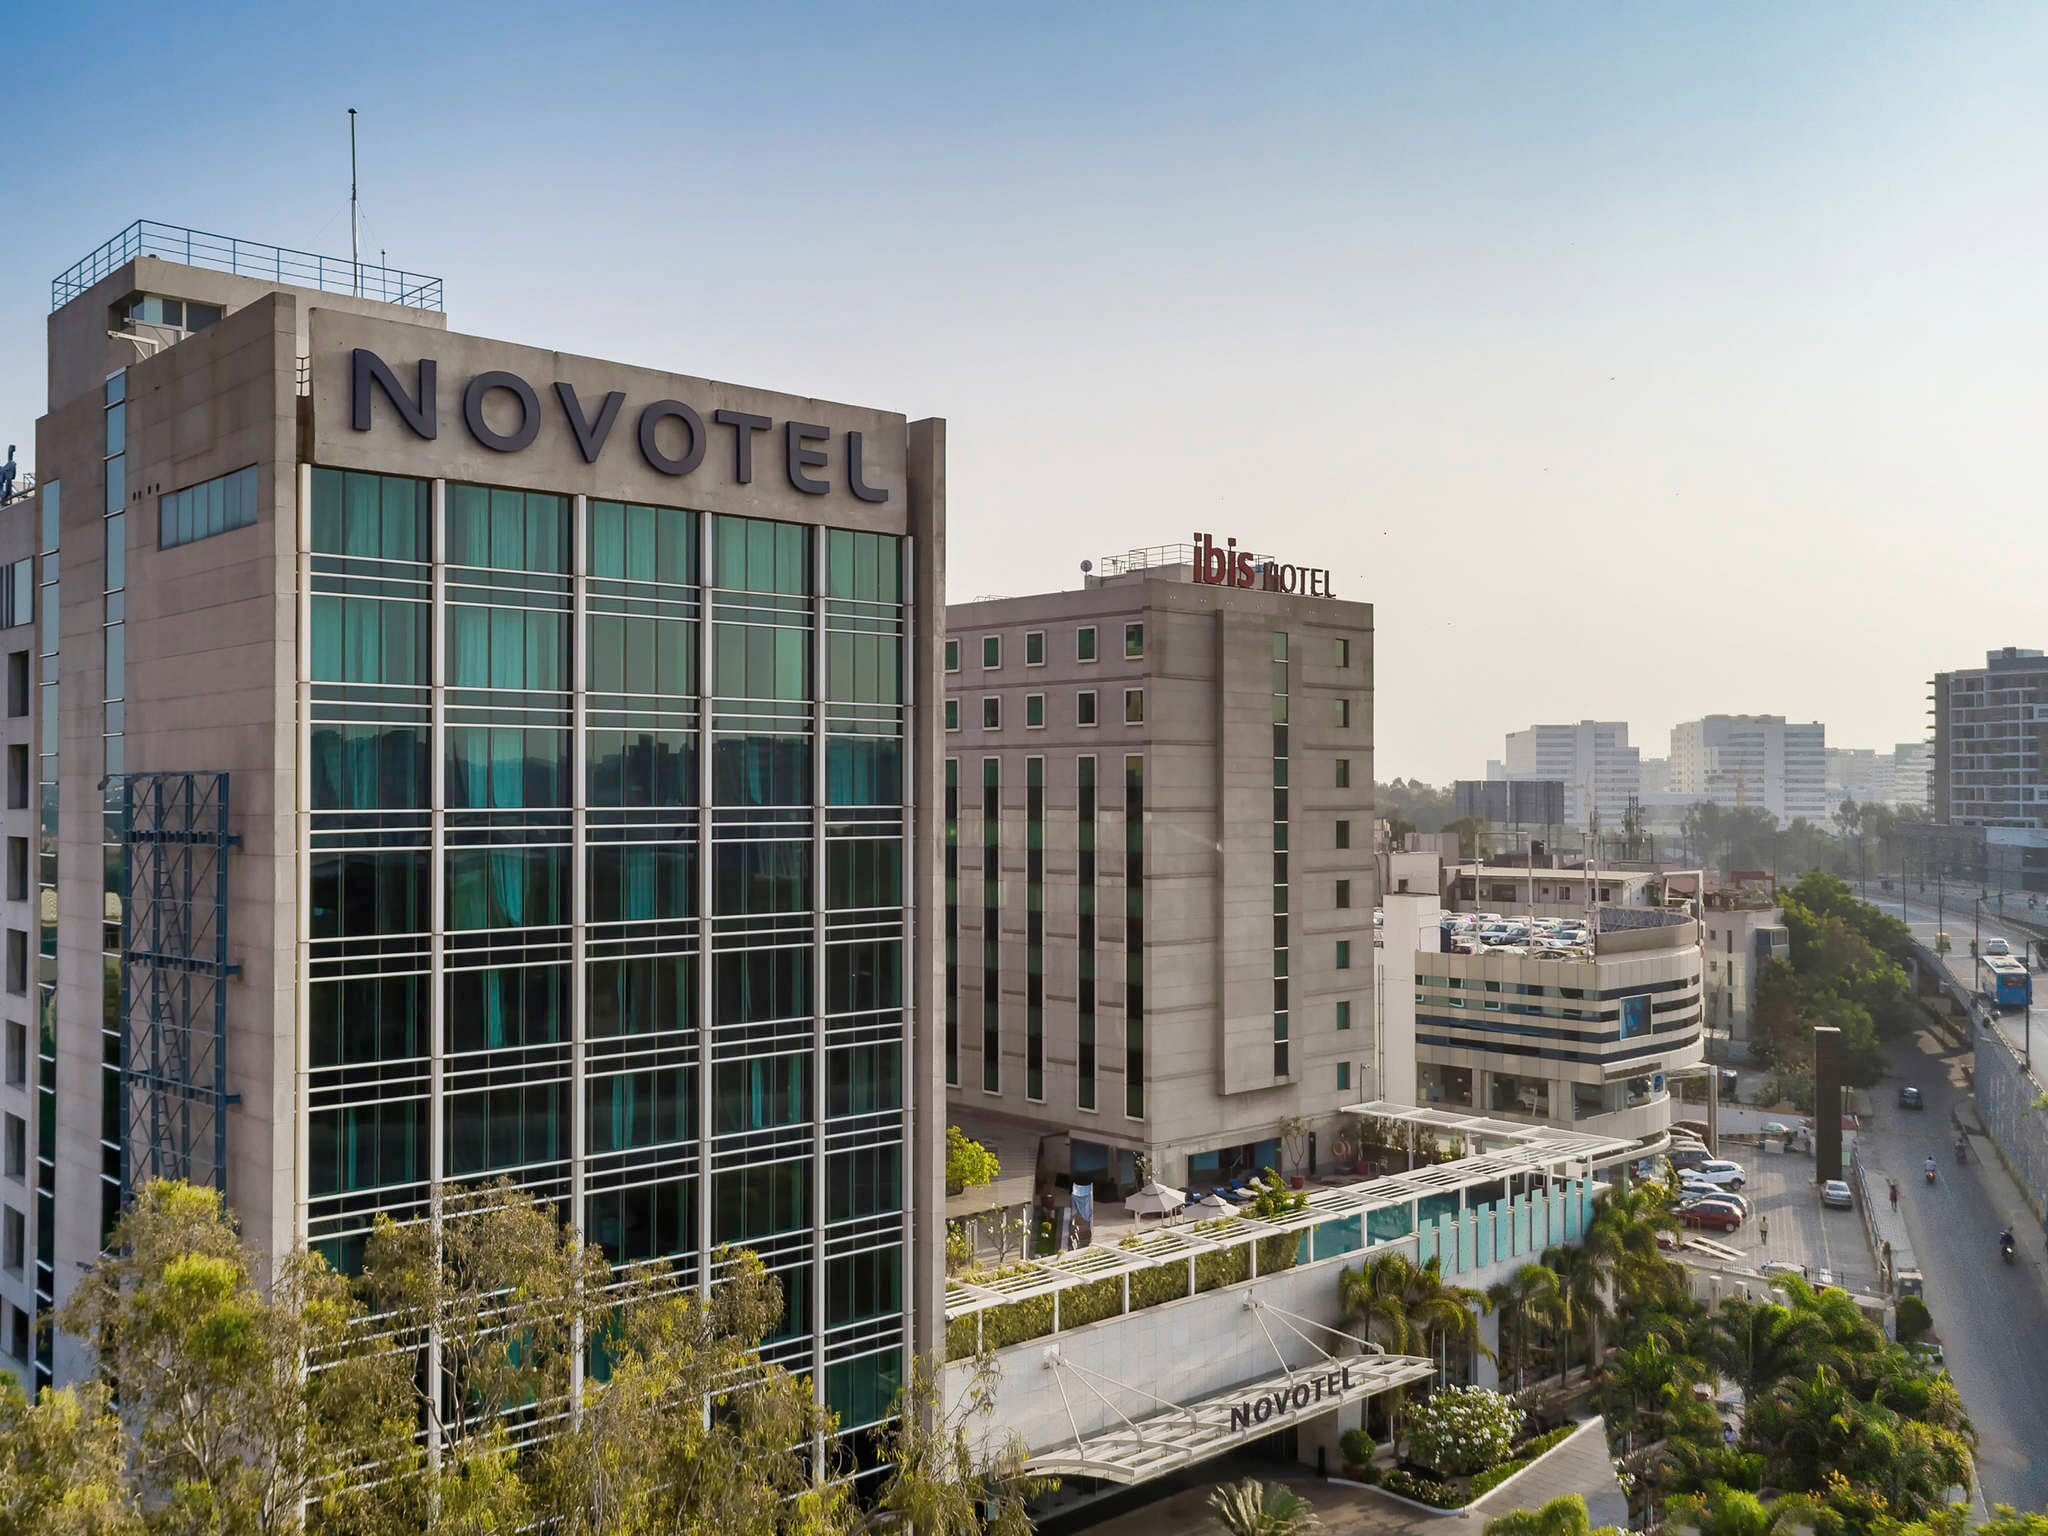 Novotel in Marathahalli, Bangalore